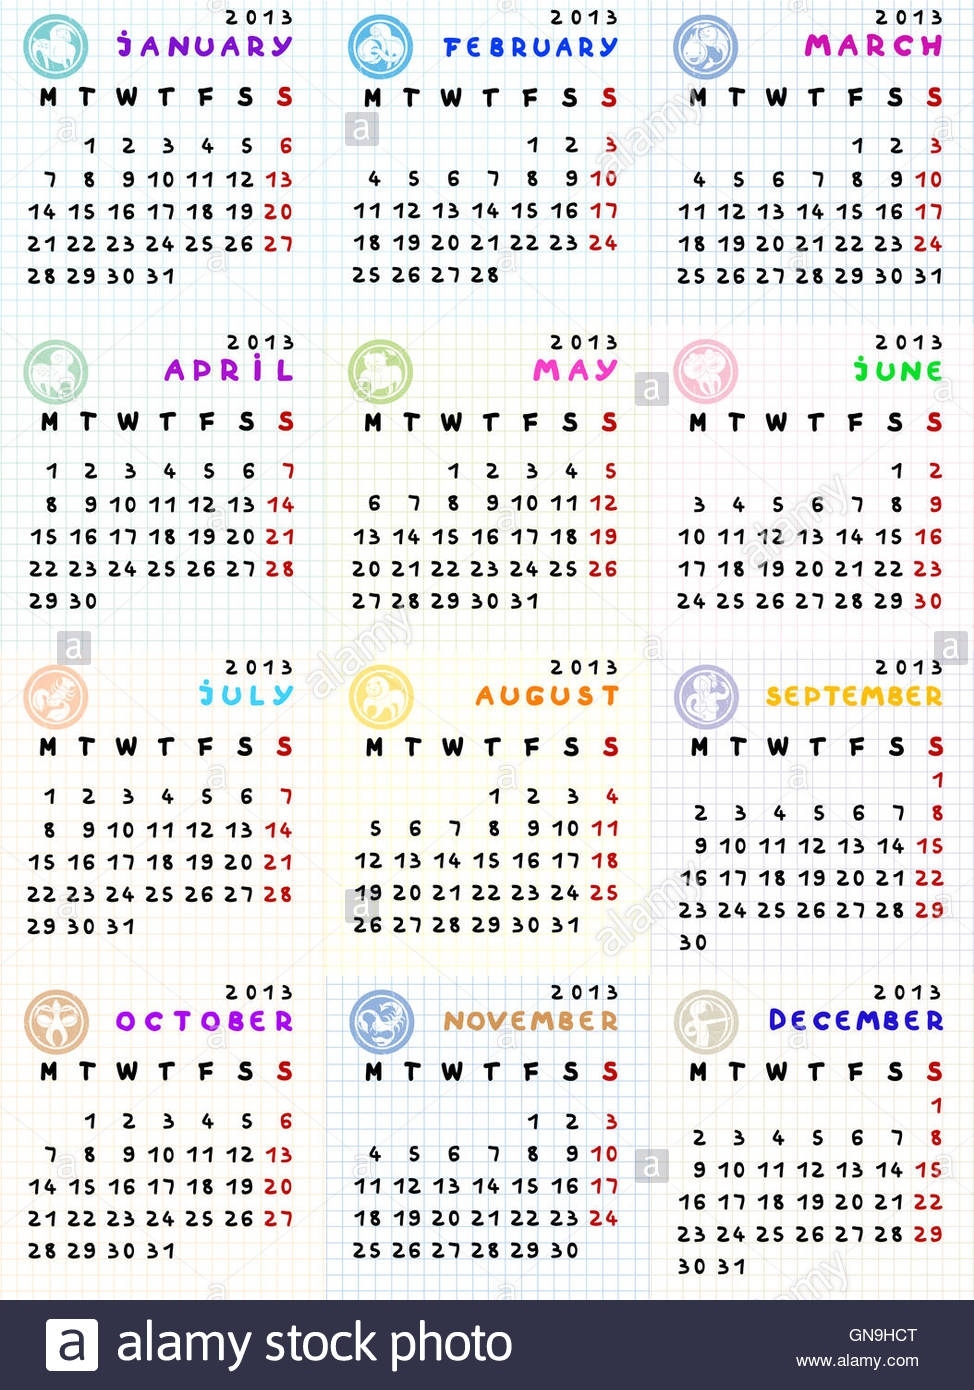 2013 Calendar With Zodiac Signs Stock Photo - Alamy Zodiac Calendar 13 Signs